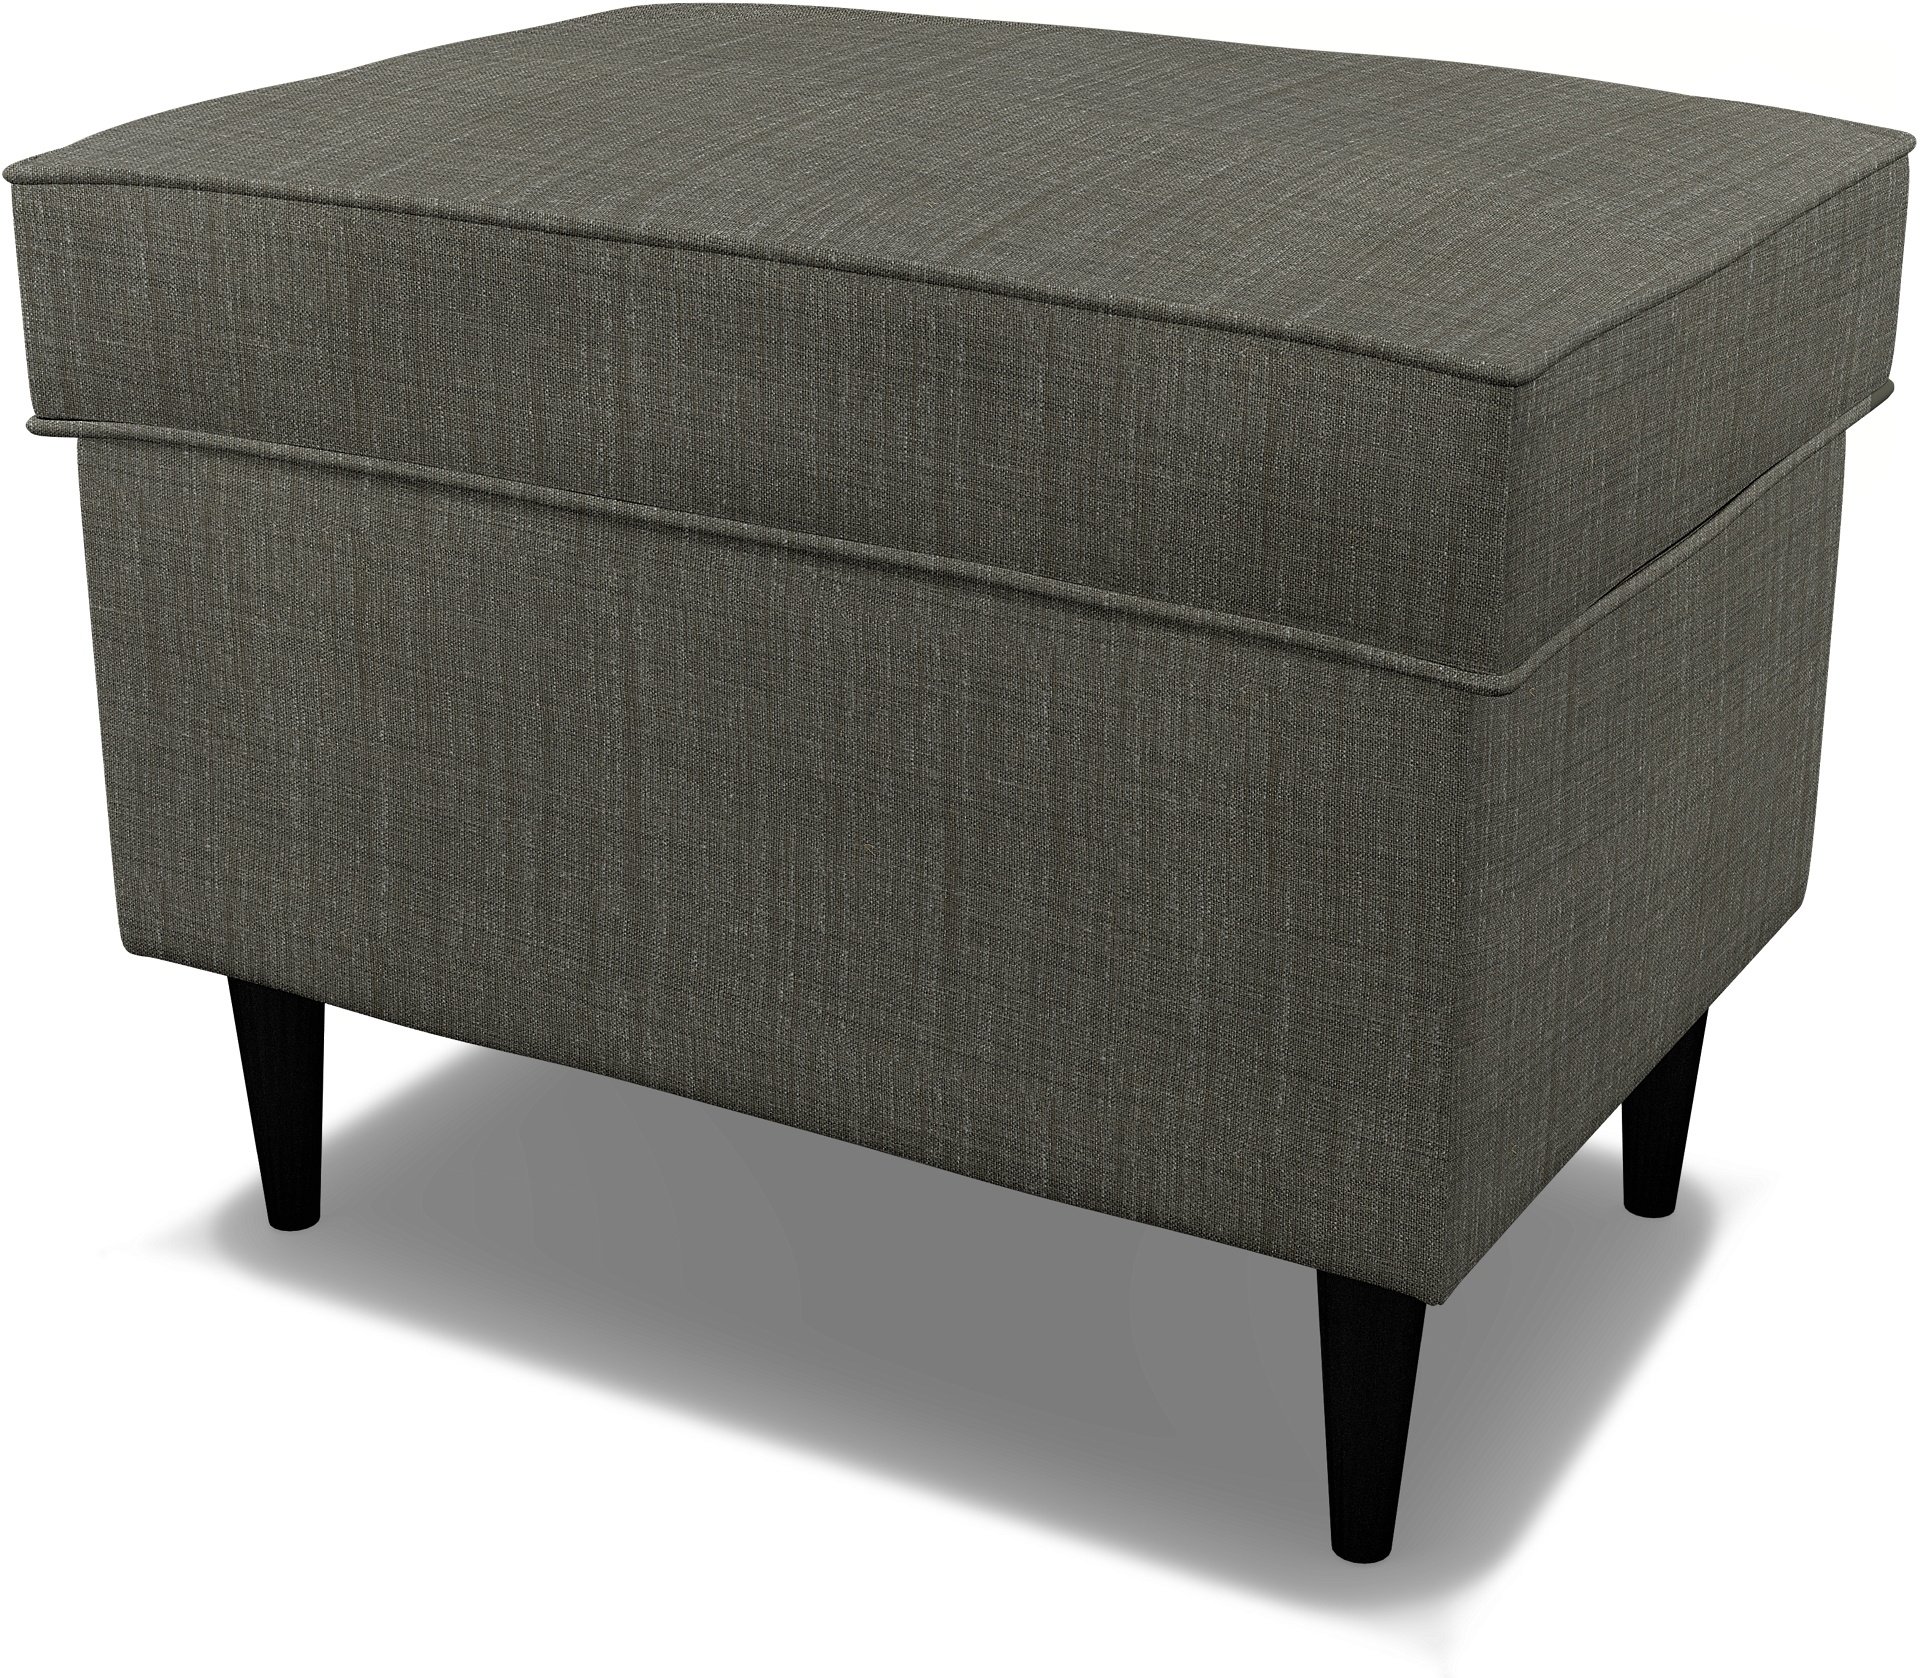 IKEA - Strandmon Footstool cover, Mole Brown, Boucle & Texture - Bemz